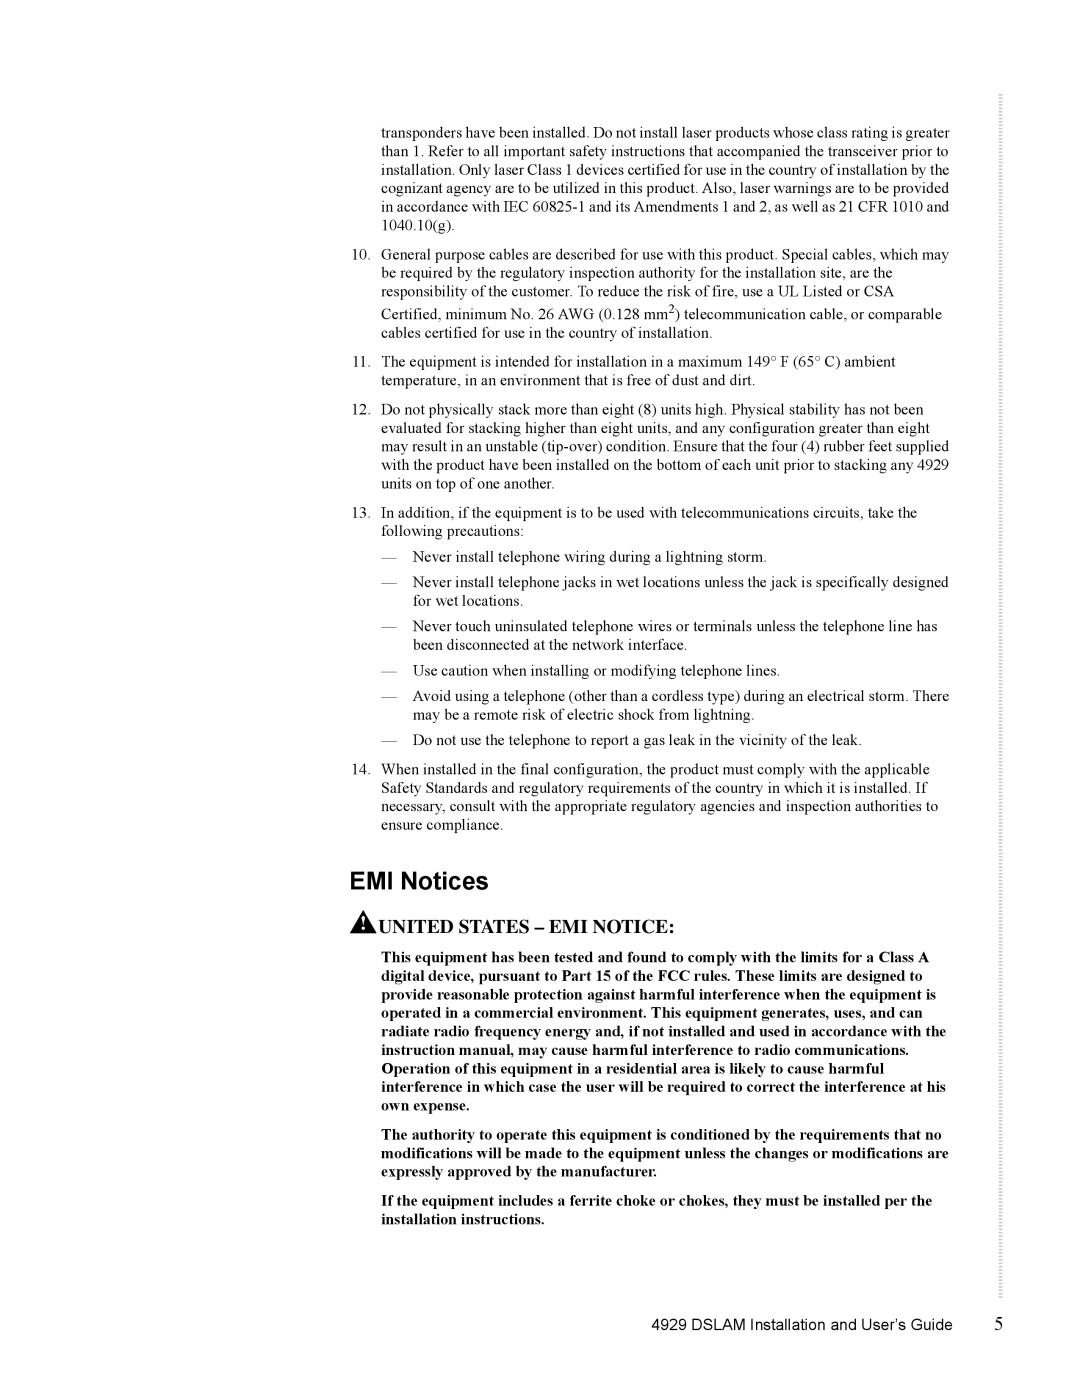 Zhone Technologies 4929 DSLAM manual EMI Notices, United States EMI Notice 